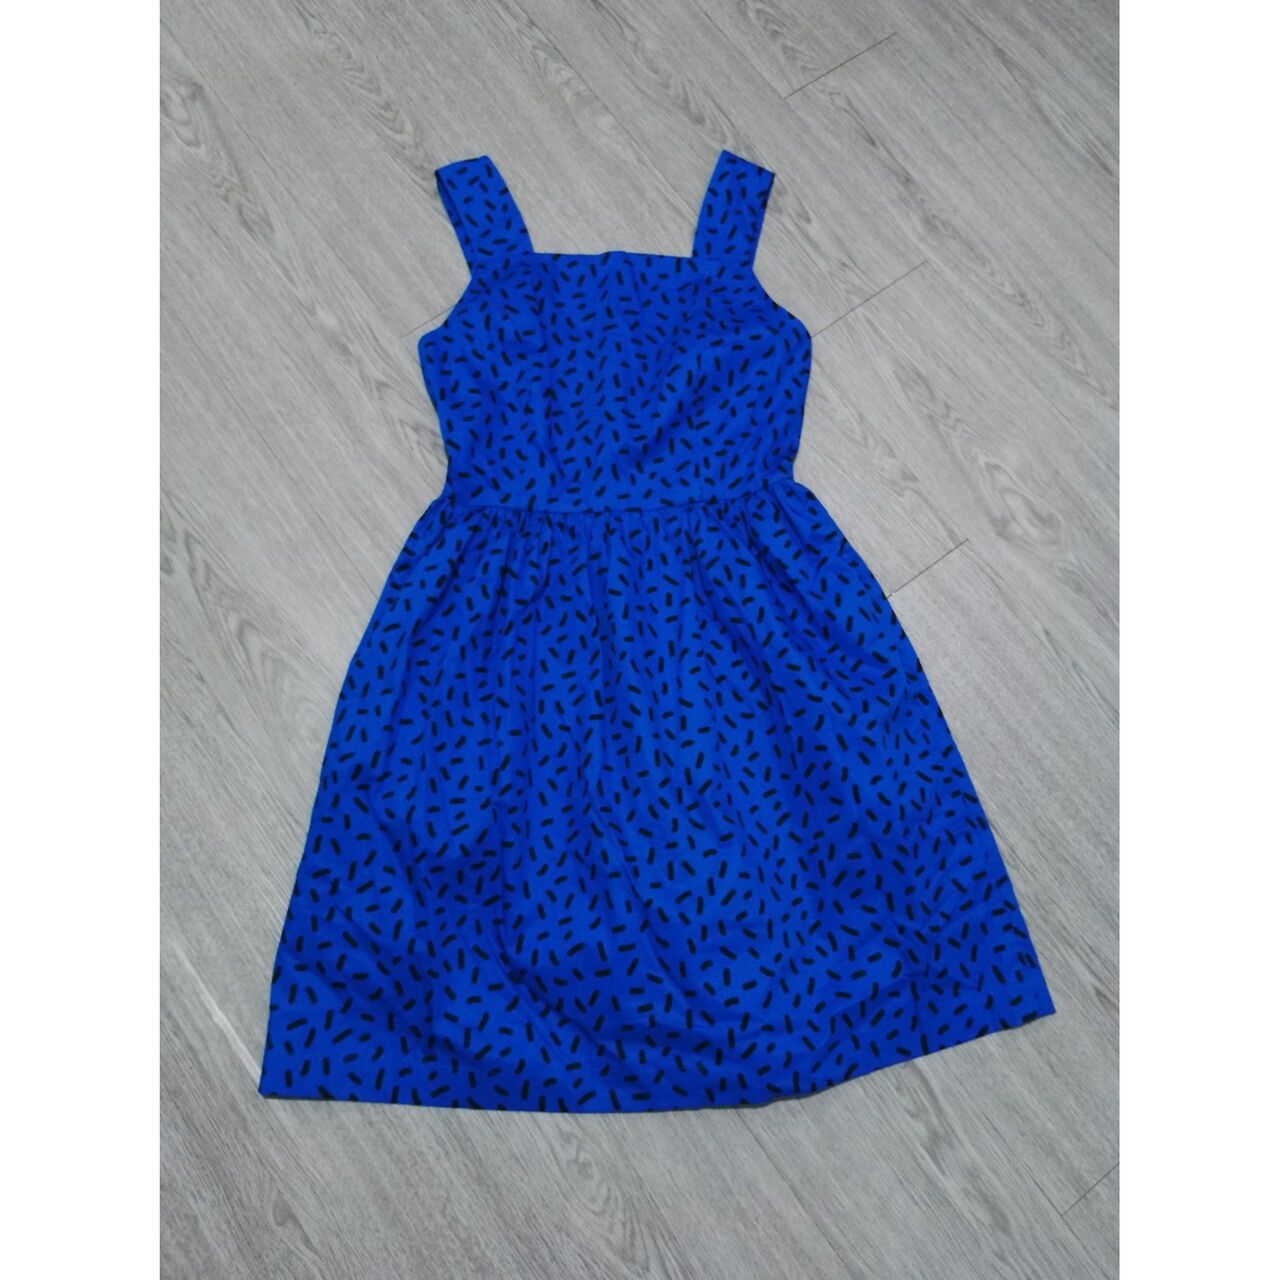 Gorman X Walala Blue Pop Art Sprinkle Dress